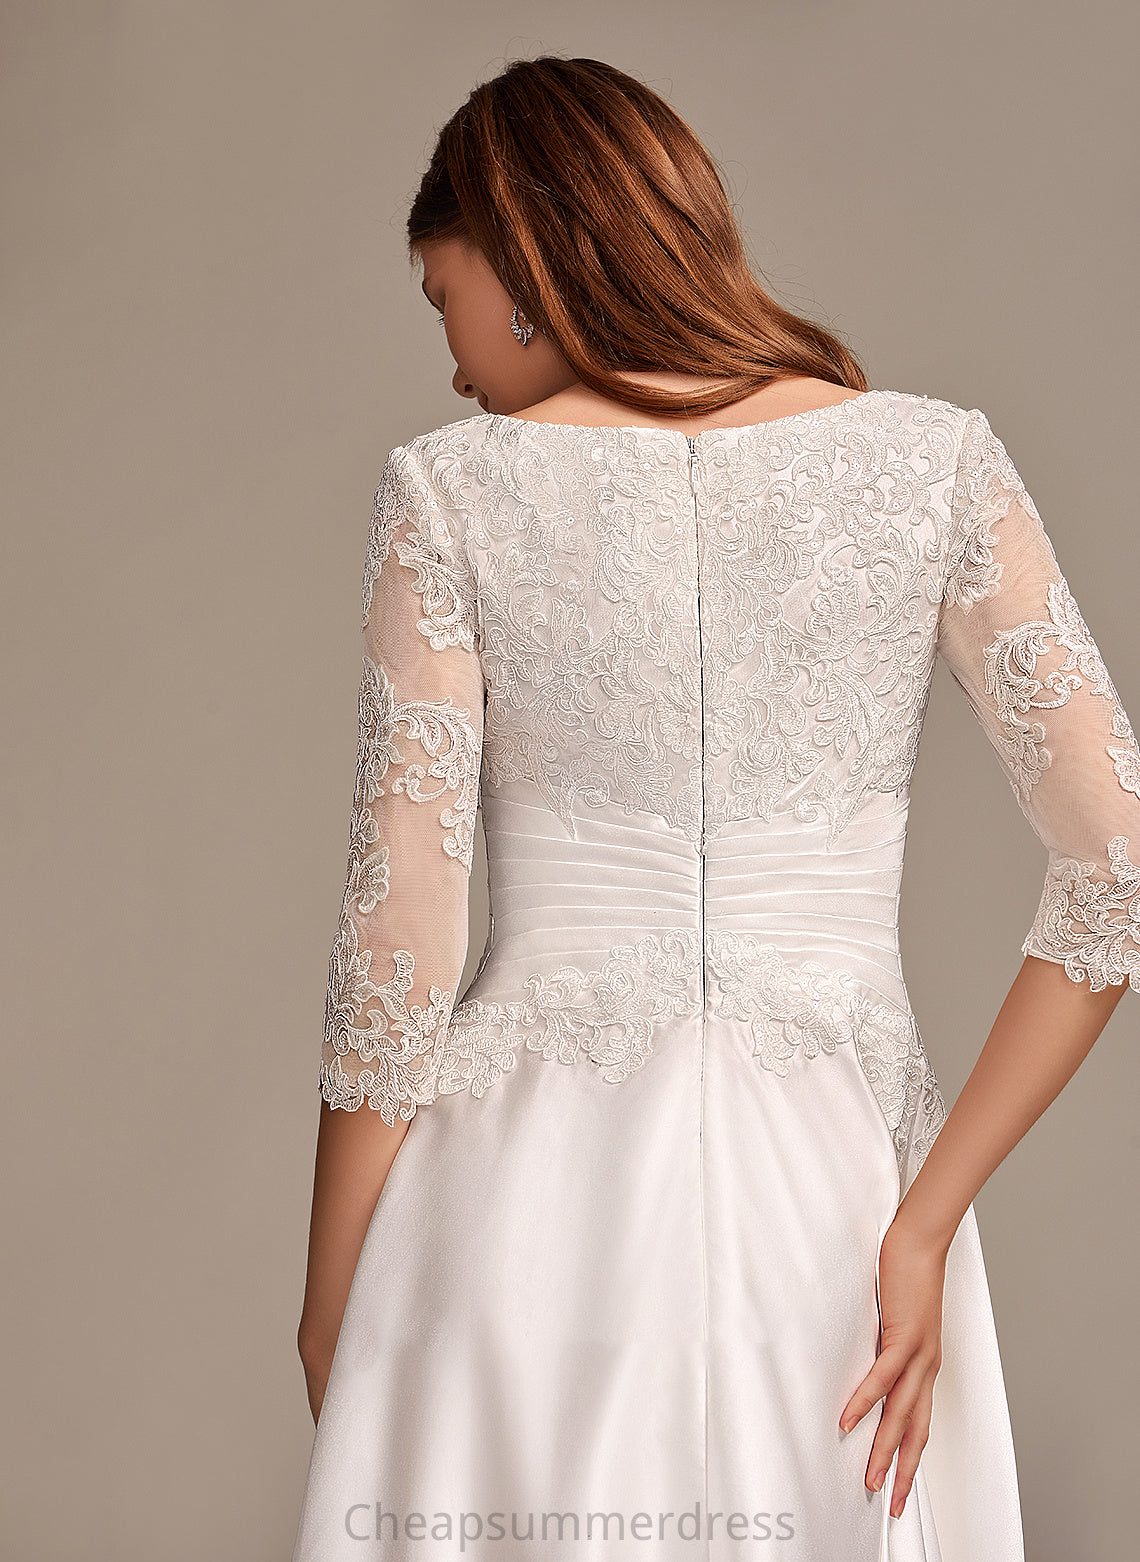 Wedding Dresses With Arianna Wedding Scoop Dress Neck Tea-Length Pockets A-Line